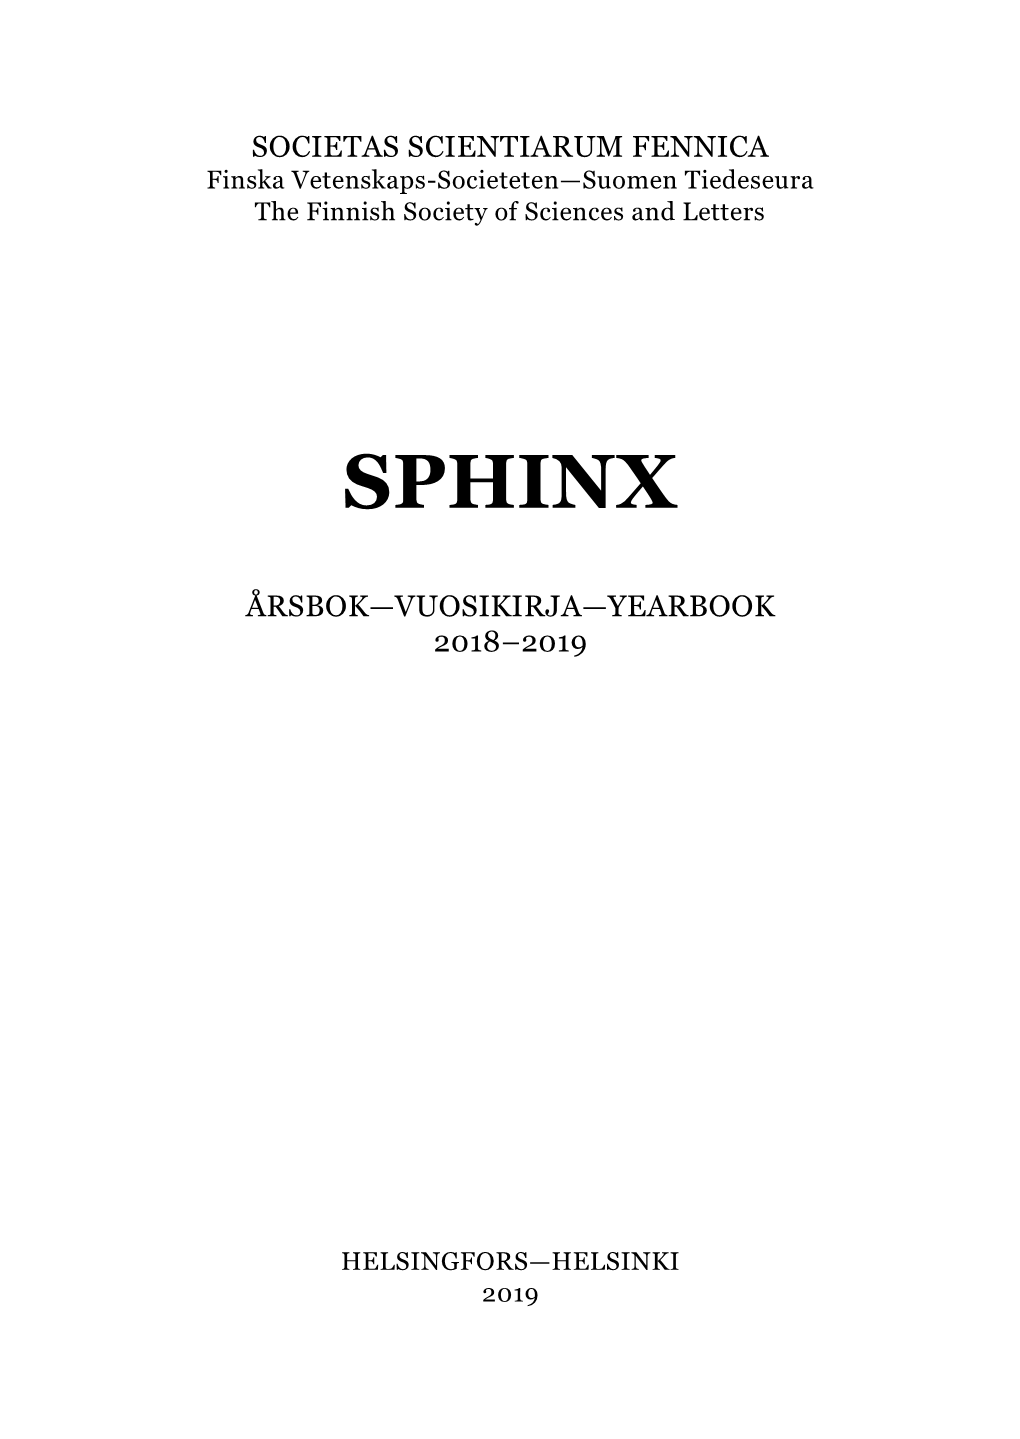 Sphinx-2018-2019-1.Pdf